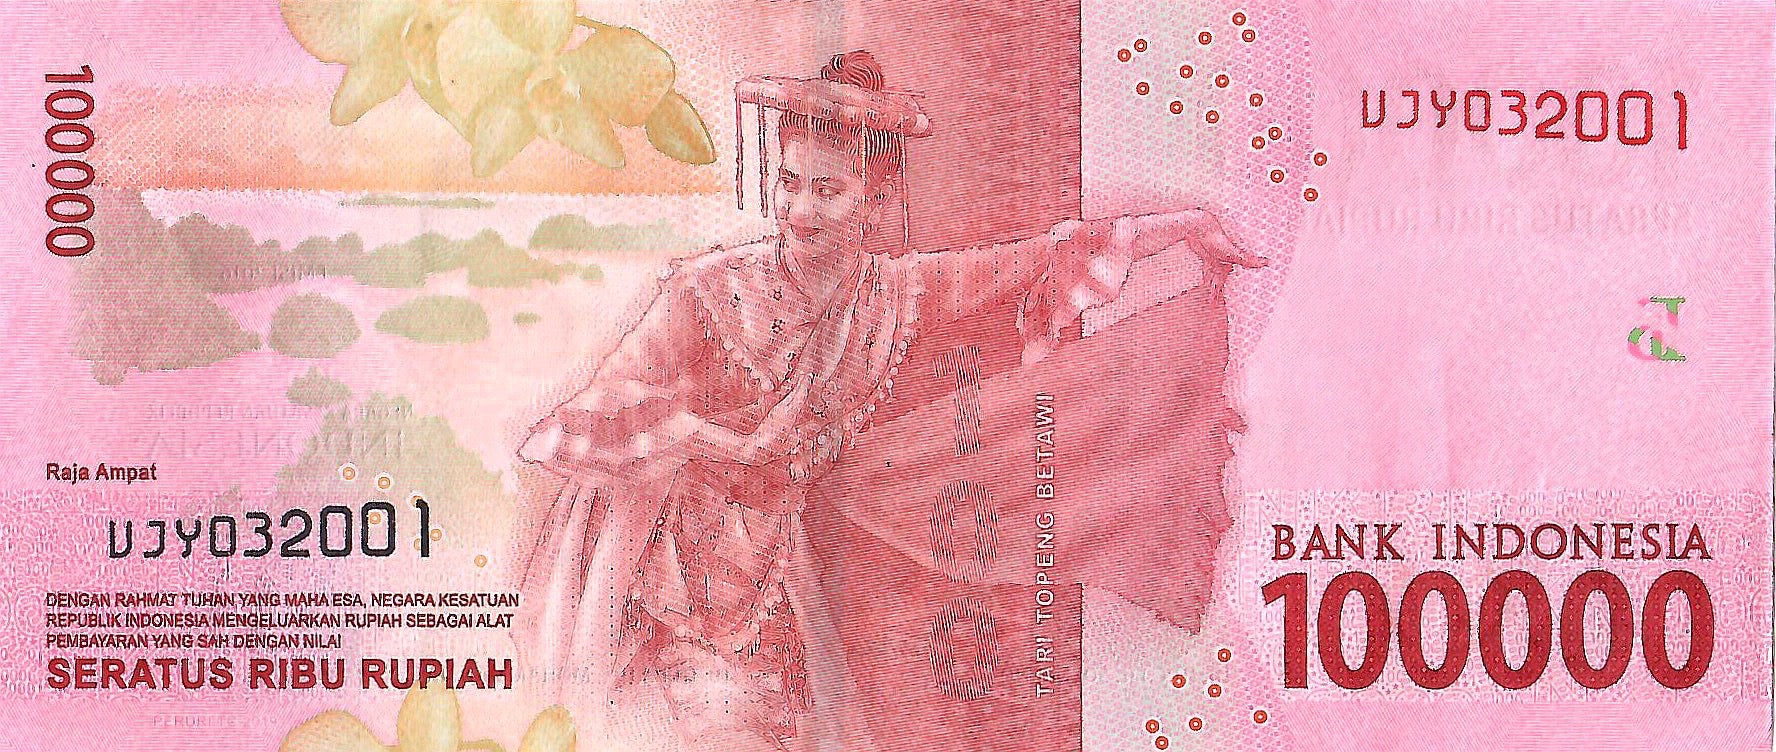 Indonesia 100,000 Rupiah Banknote, 2019, P-160d, UNC